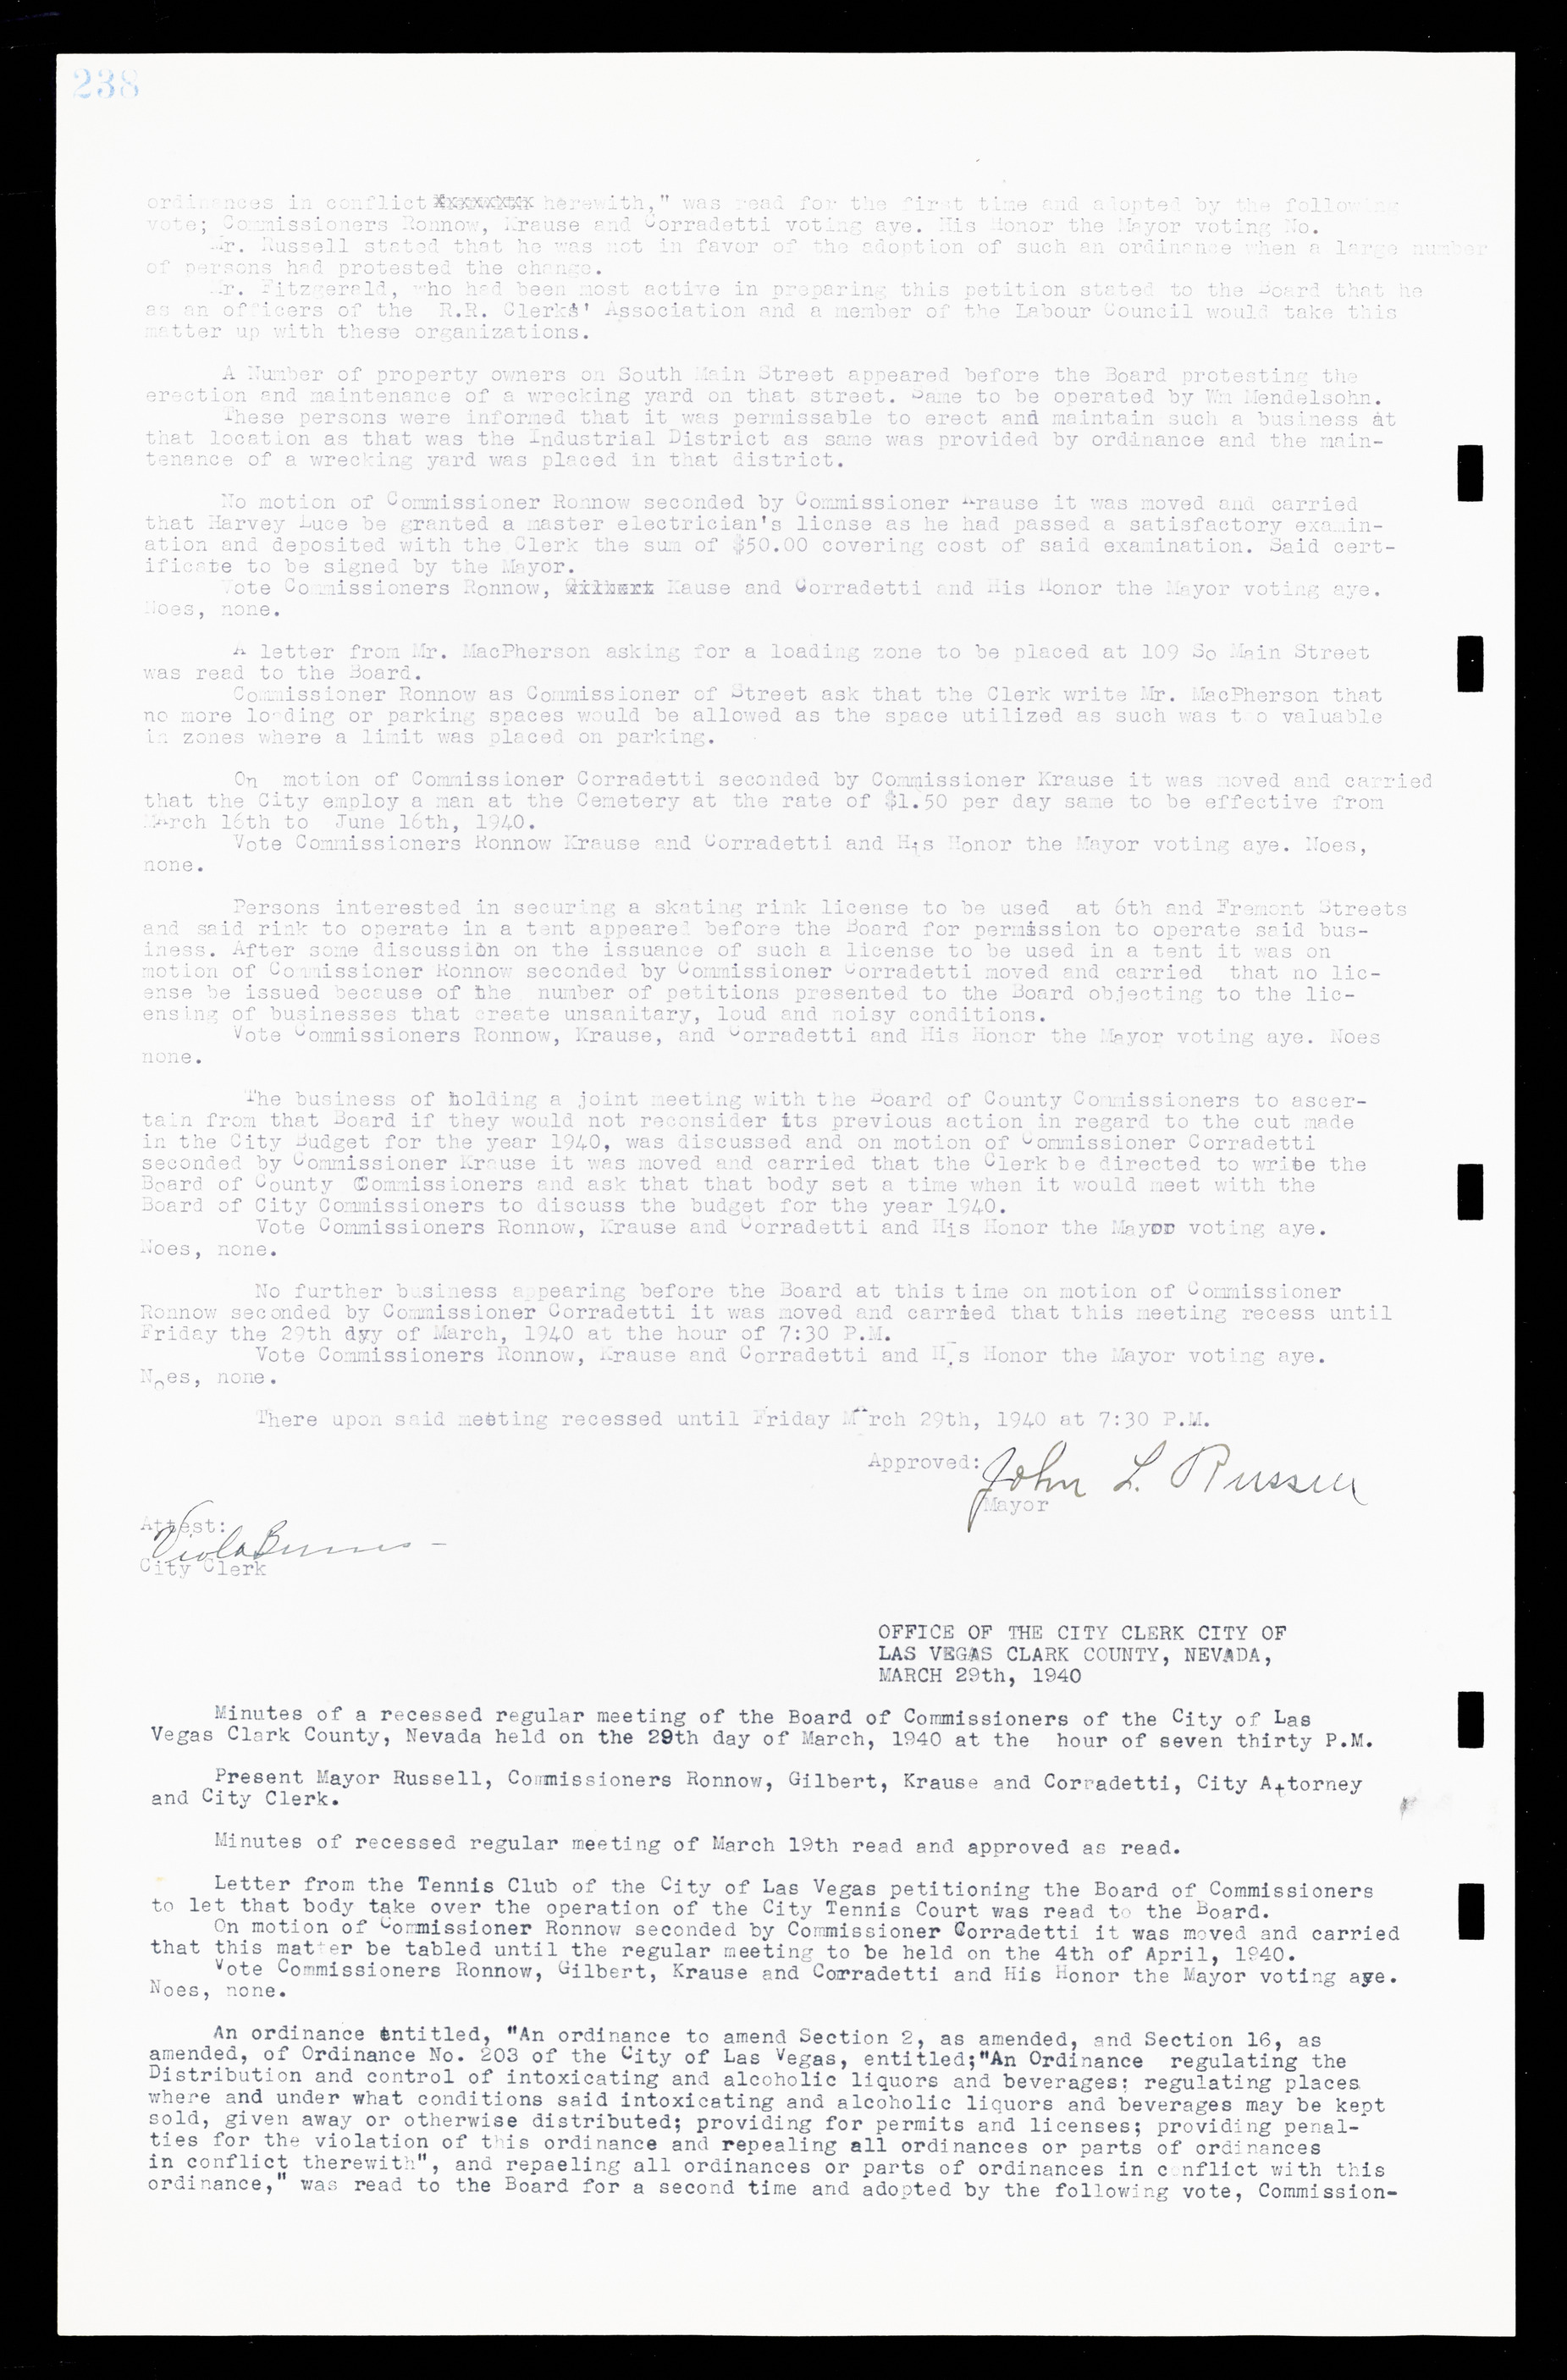 Las Vegas City Commission Minutes, February 17, 1937 to August 4, 1942, lvc000004-258